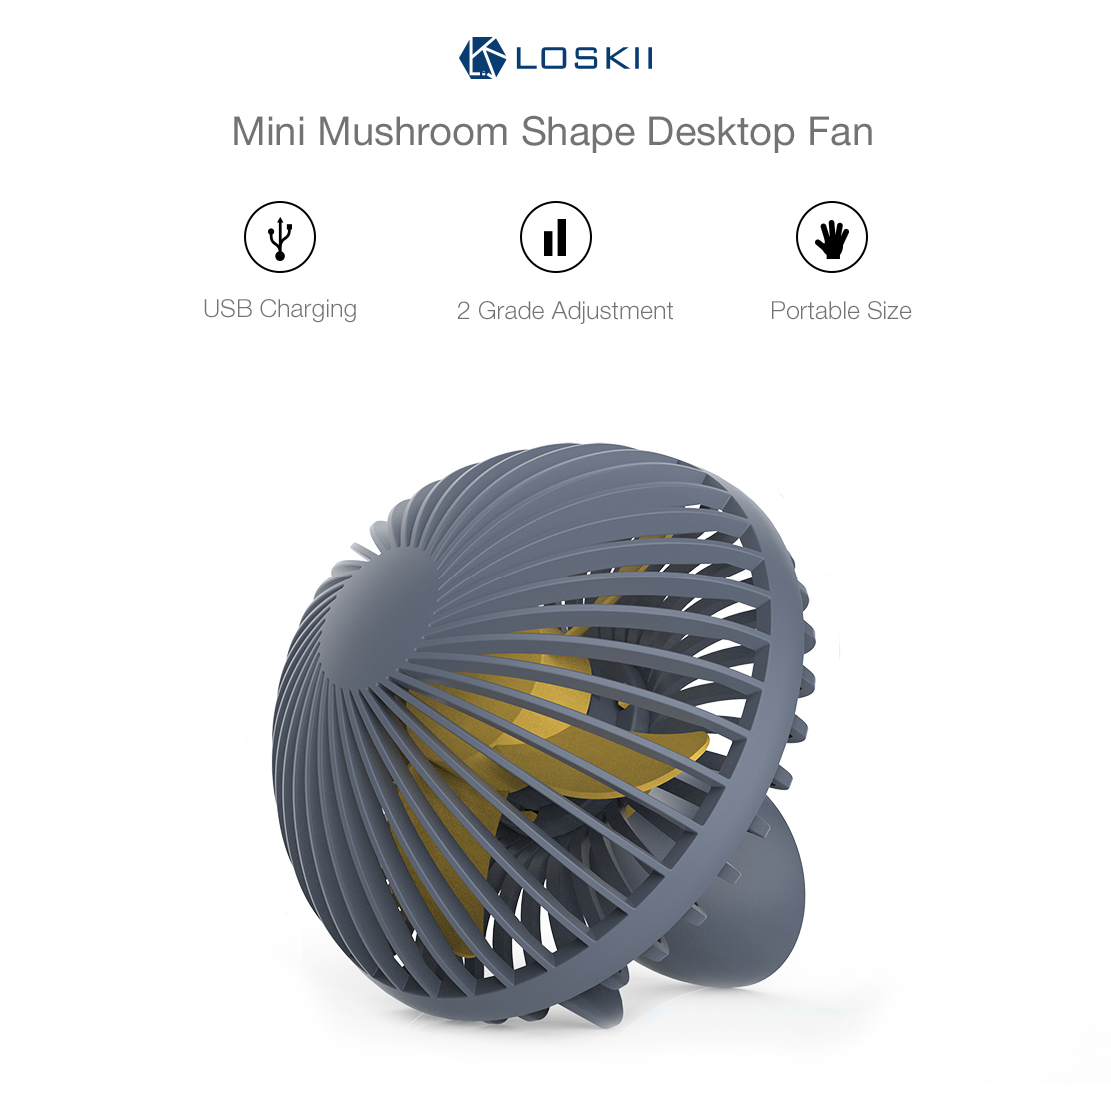 Loskii HF-200 Portable Mini Electronic Desktop Mushroom Shape Summer Cooling Fan 2 Grade Adjustment USB Charging Fan 75